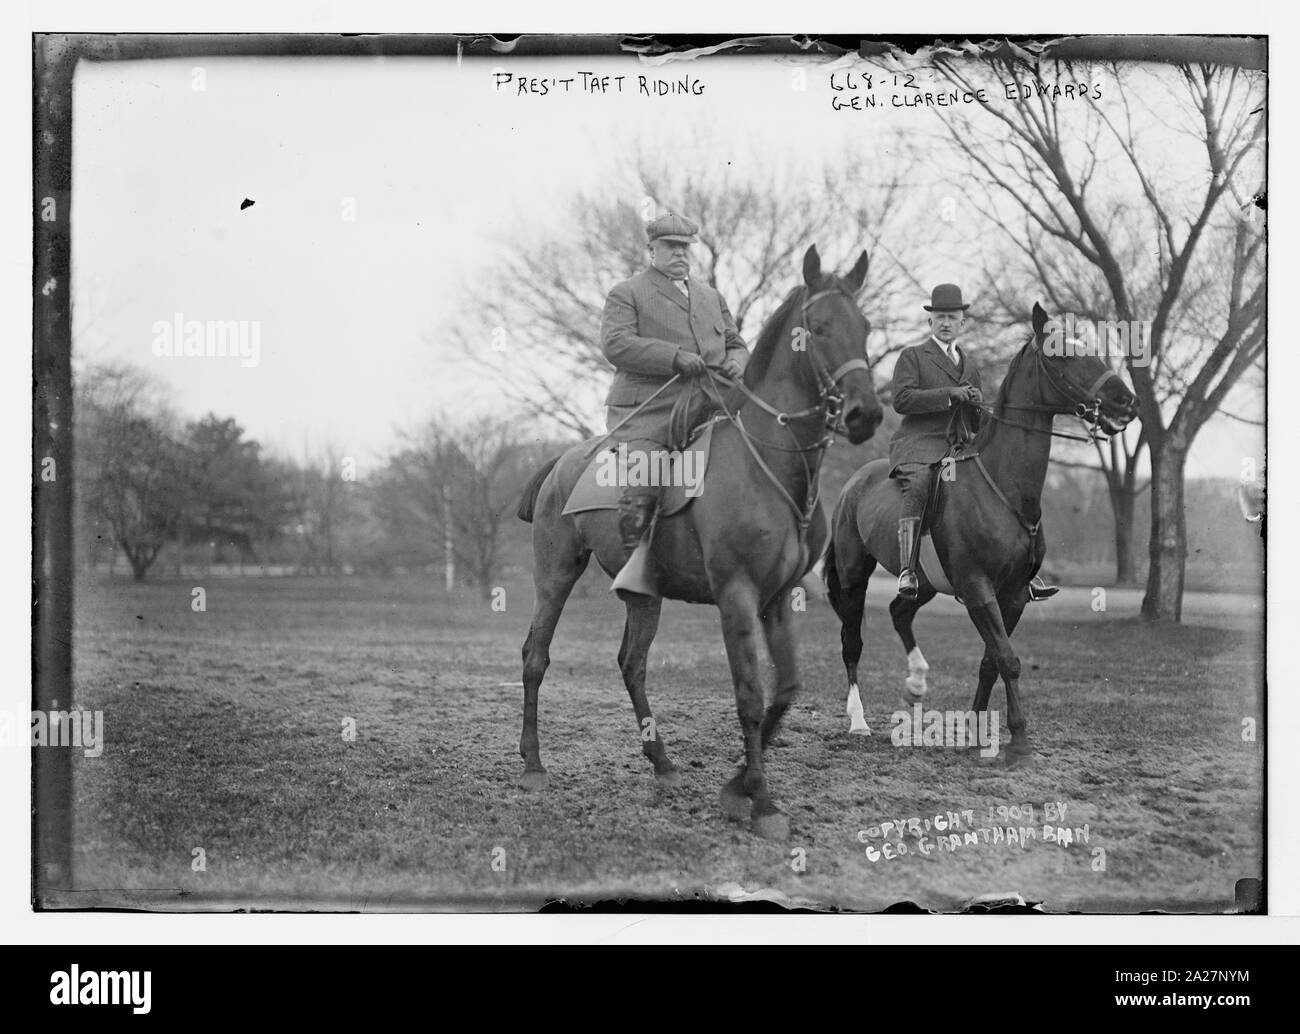 President Taft and Gen. Clarence Edwards riding horses Stock Photo - Alamy